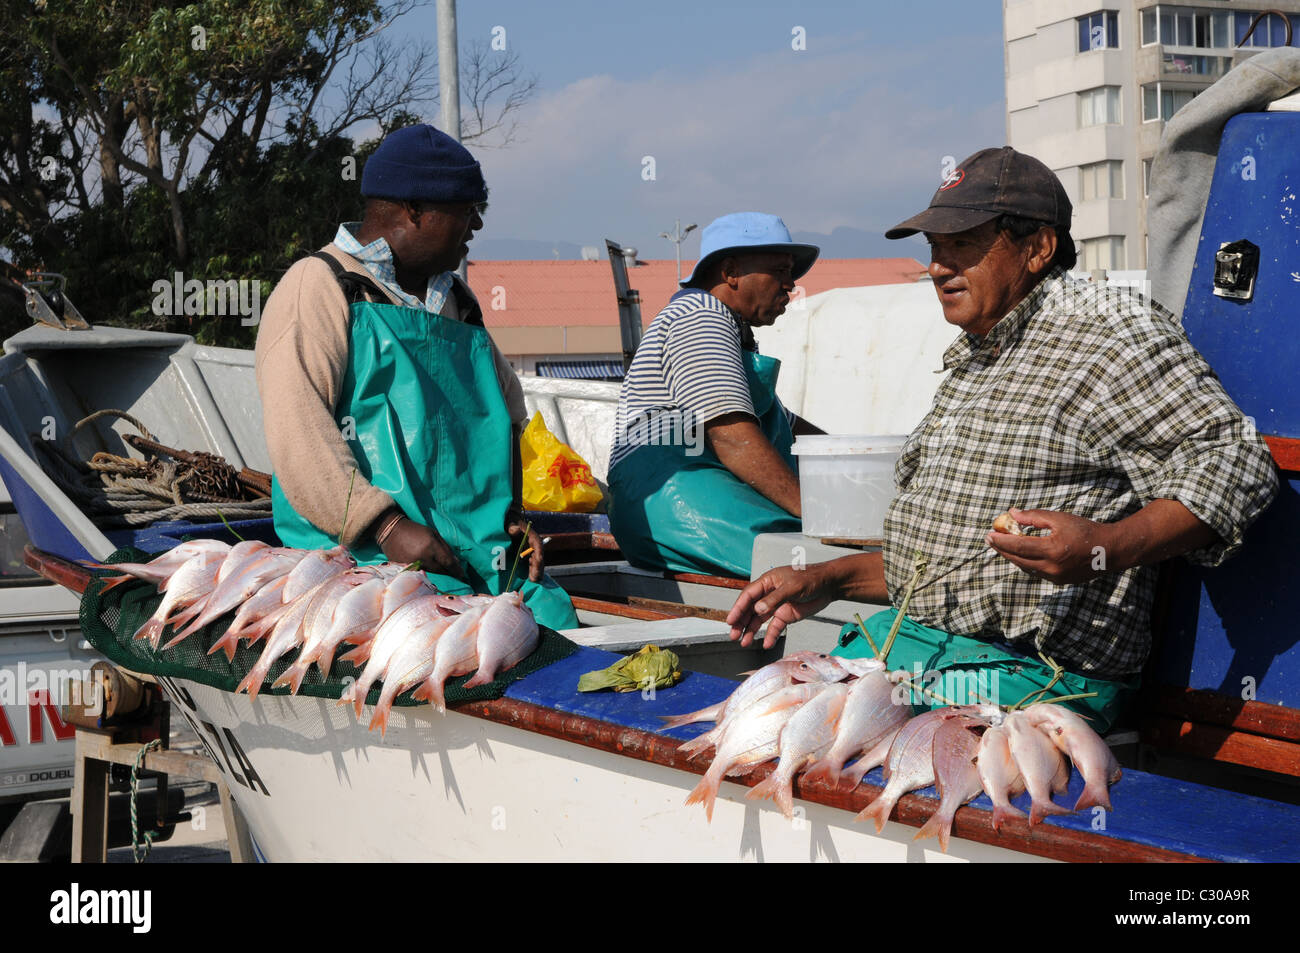 Several fishermen, fishermen who sell fish, fish for sale, boat, commercial fishermen Stock Photo